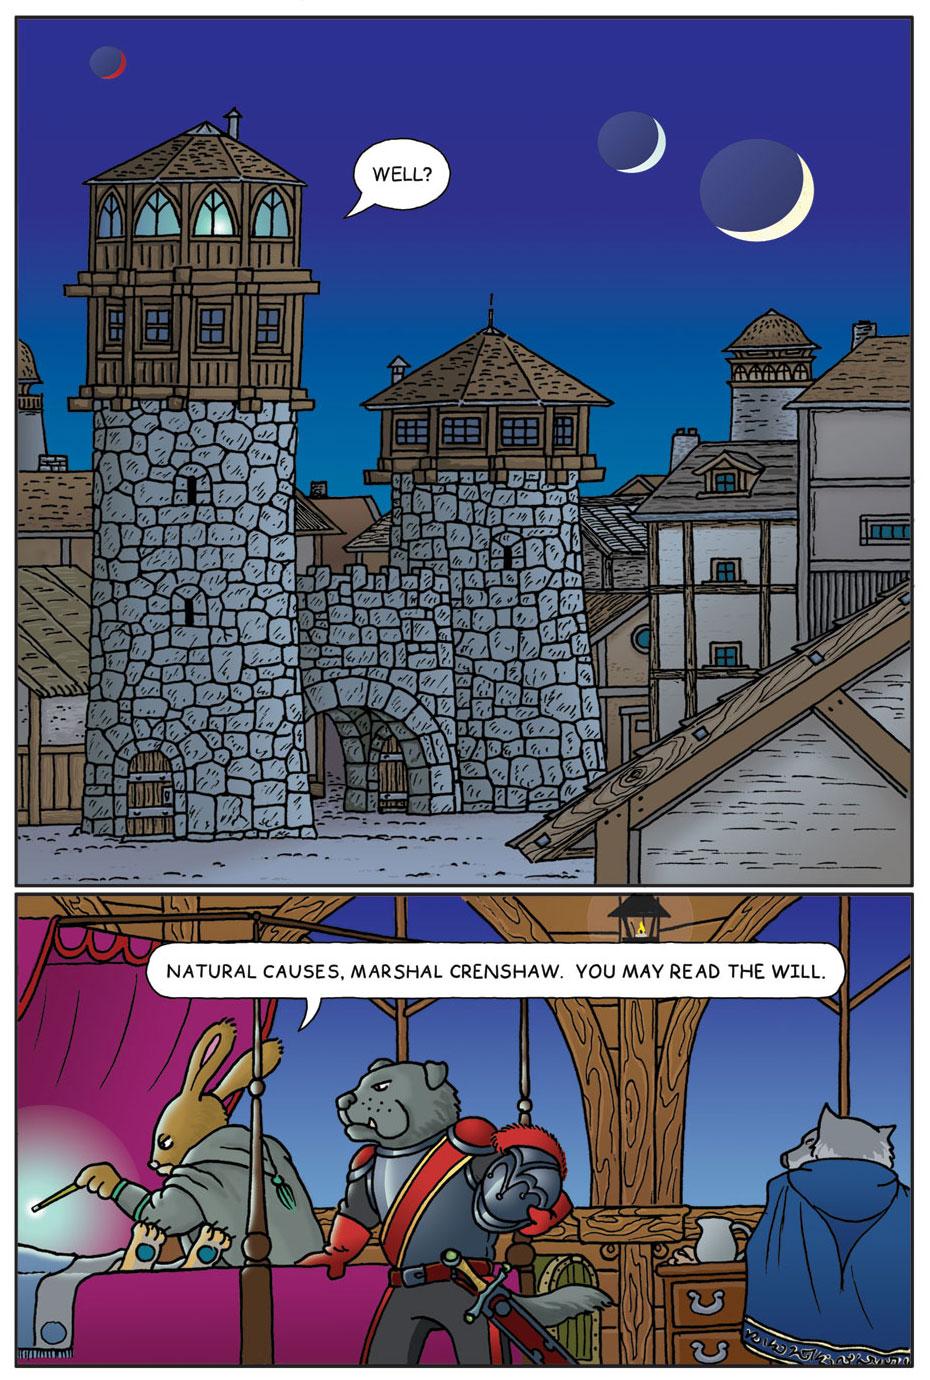 Baron of Krohagen Issue1 page1